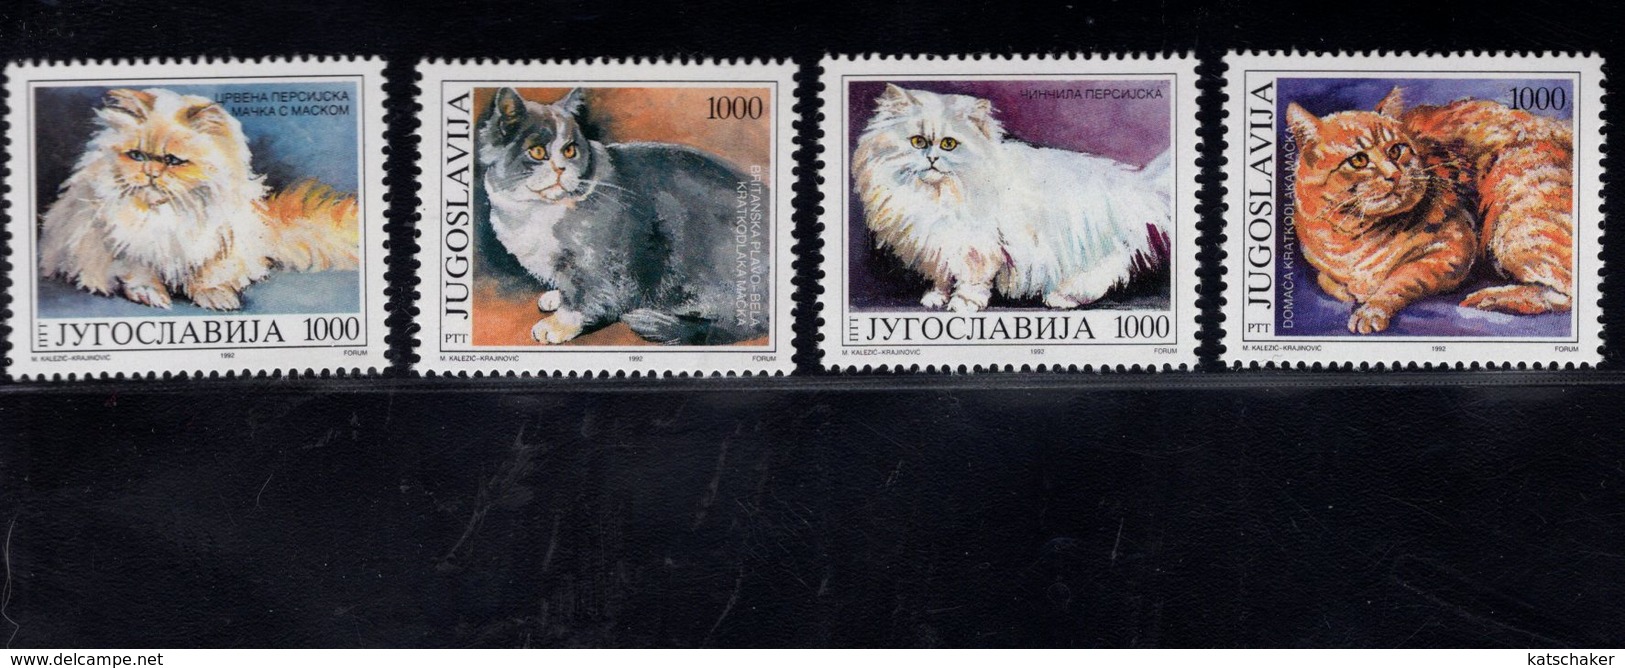 693920719 YUGOSLAVIA POSTFRIS MINT NEVER HINGED POSTFRISCH EINWANDFREI SCOTT 2163 2166 DOMESTIC CATS - Zambie (1965-...)